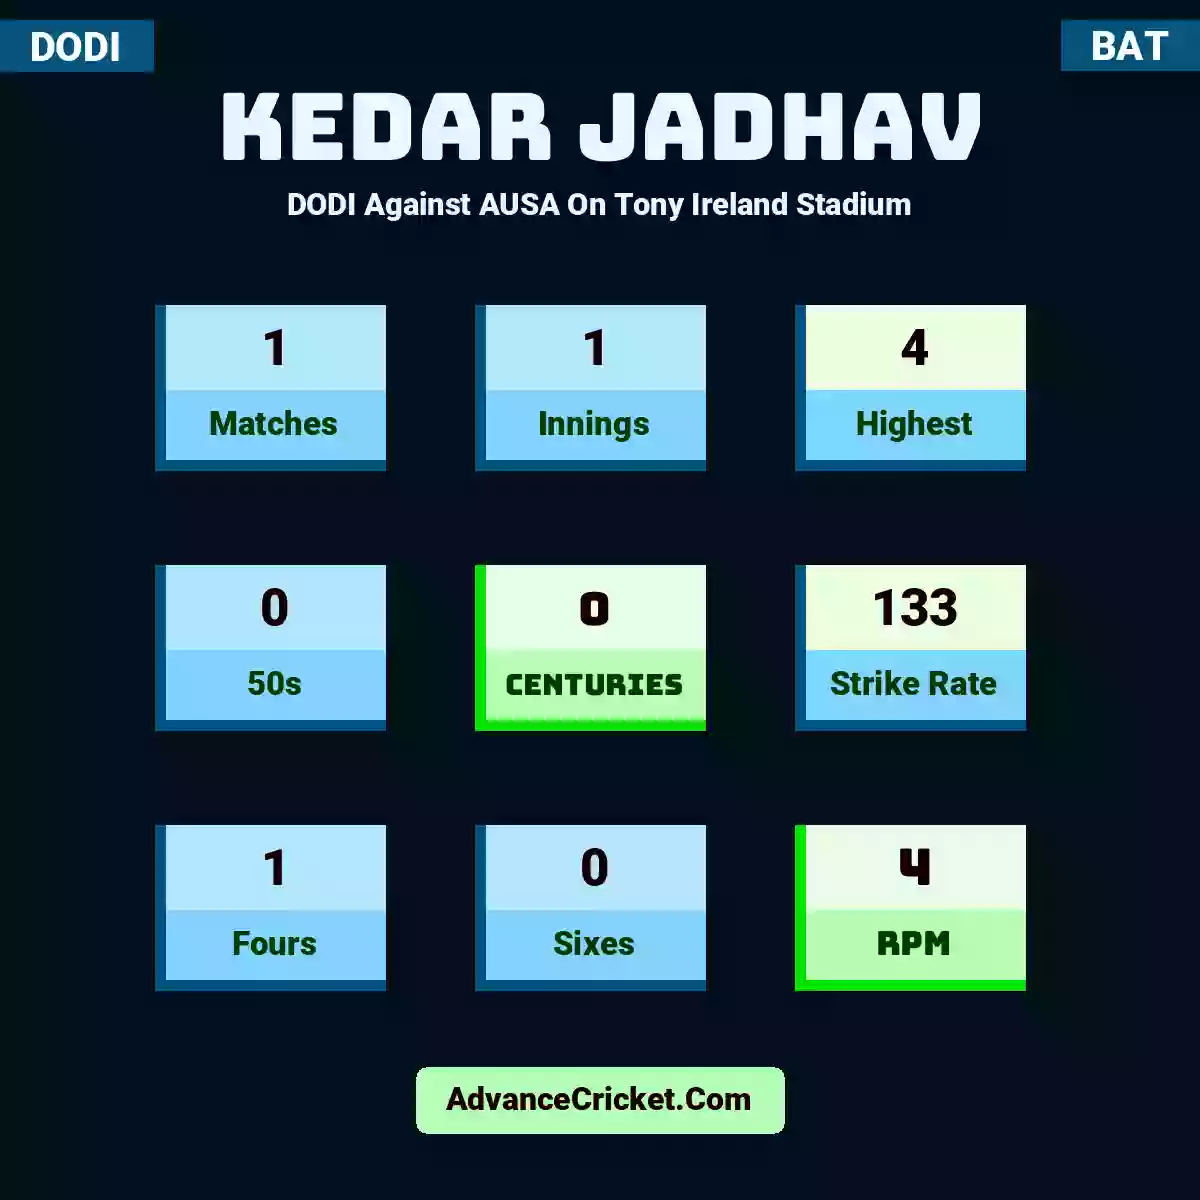 Kedar Jadhav DODI  Against AUSA On Tony Ireland Stadium, Kedar Jadhav played 1 matches, scored 4 runs as highest, 0 half-centuries, and 0 centuries, with a strike rate of 133. K.Jadhav hit 1 fours and 0 sixes, with an RPM of 4.